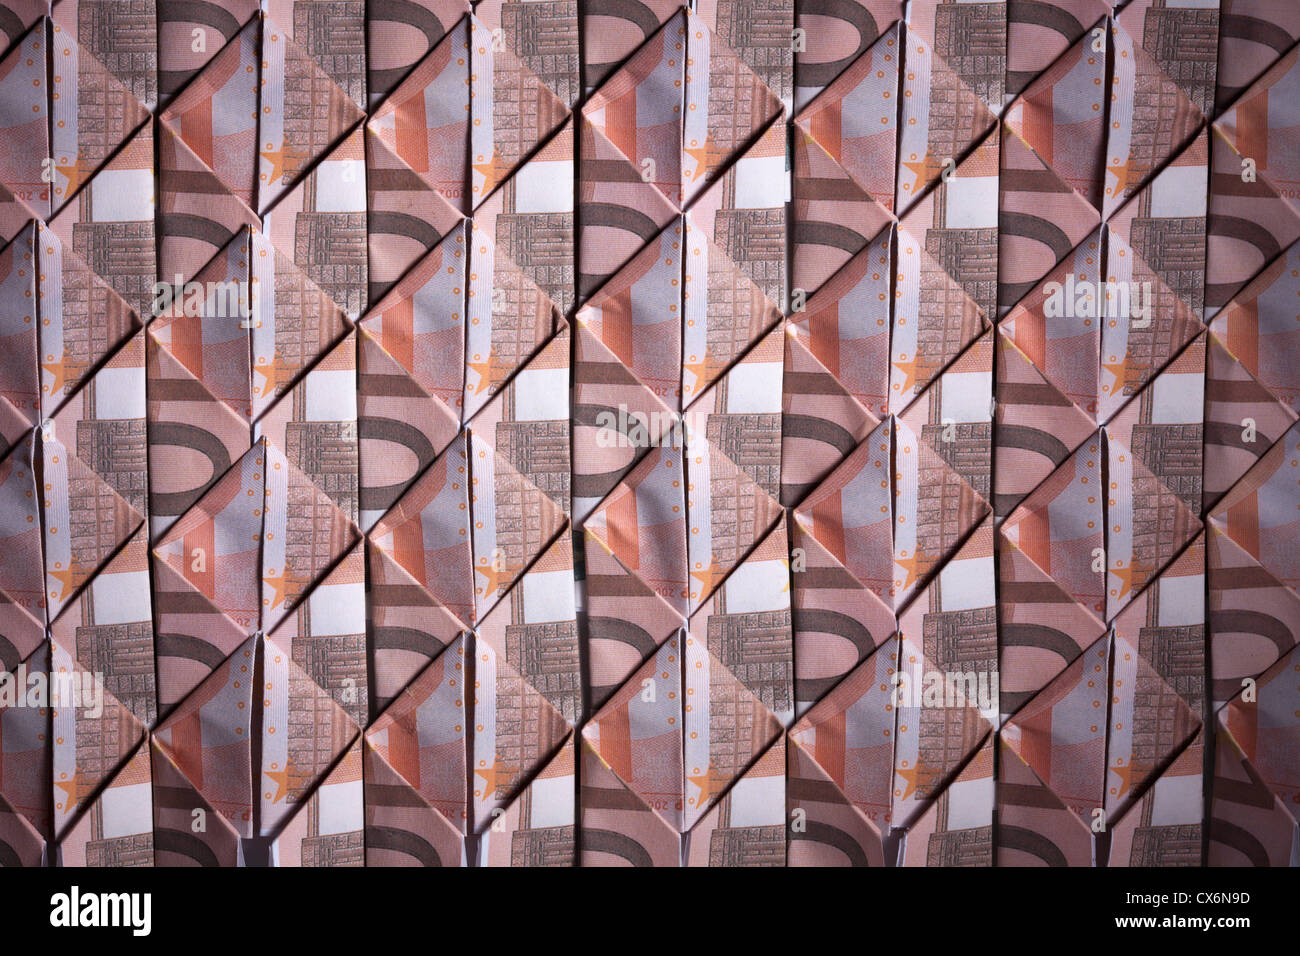 Ten Euro banknotes folded into diamond shapes and interwoven, full frame Stock Photo